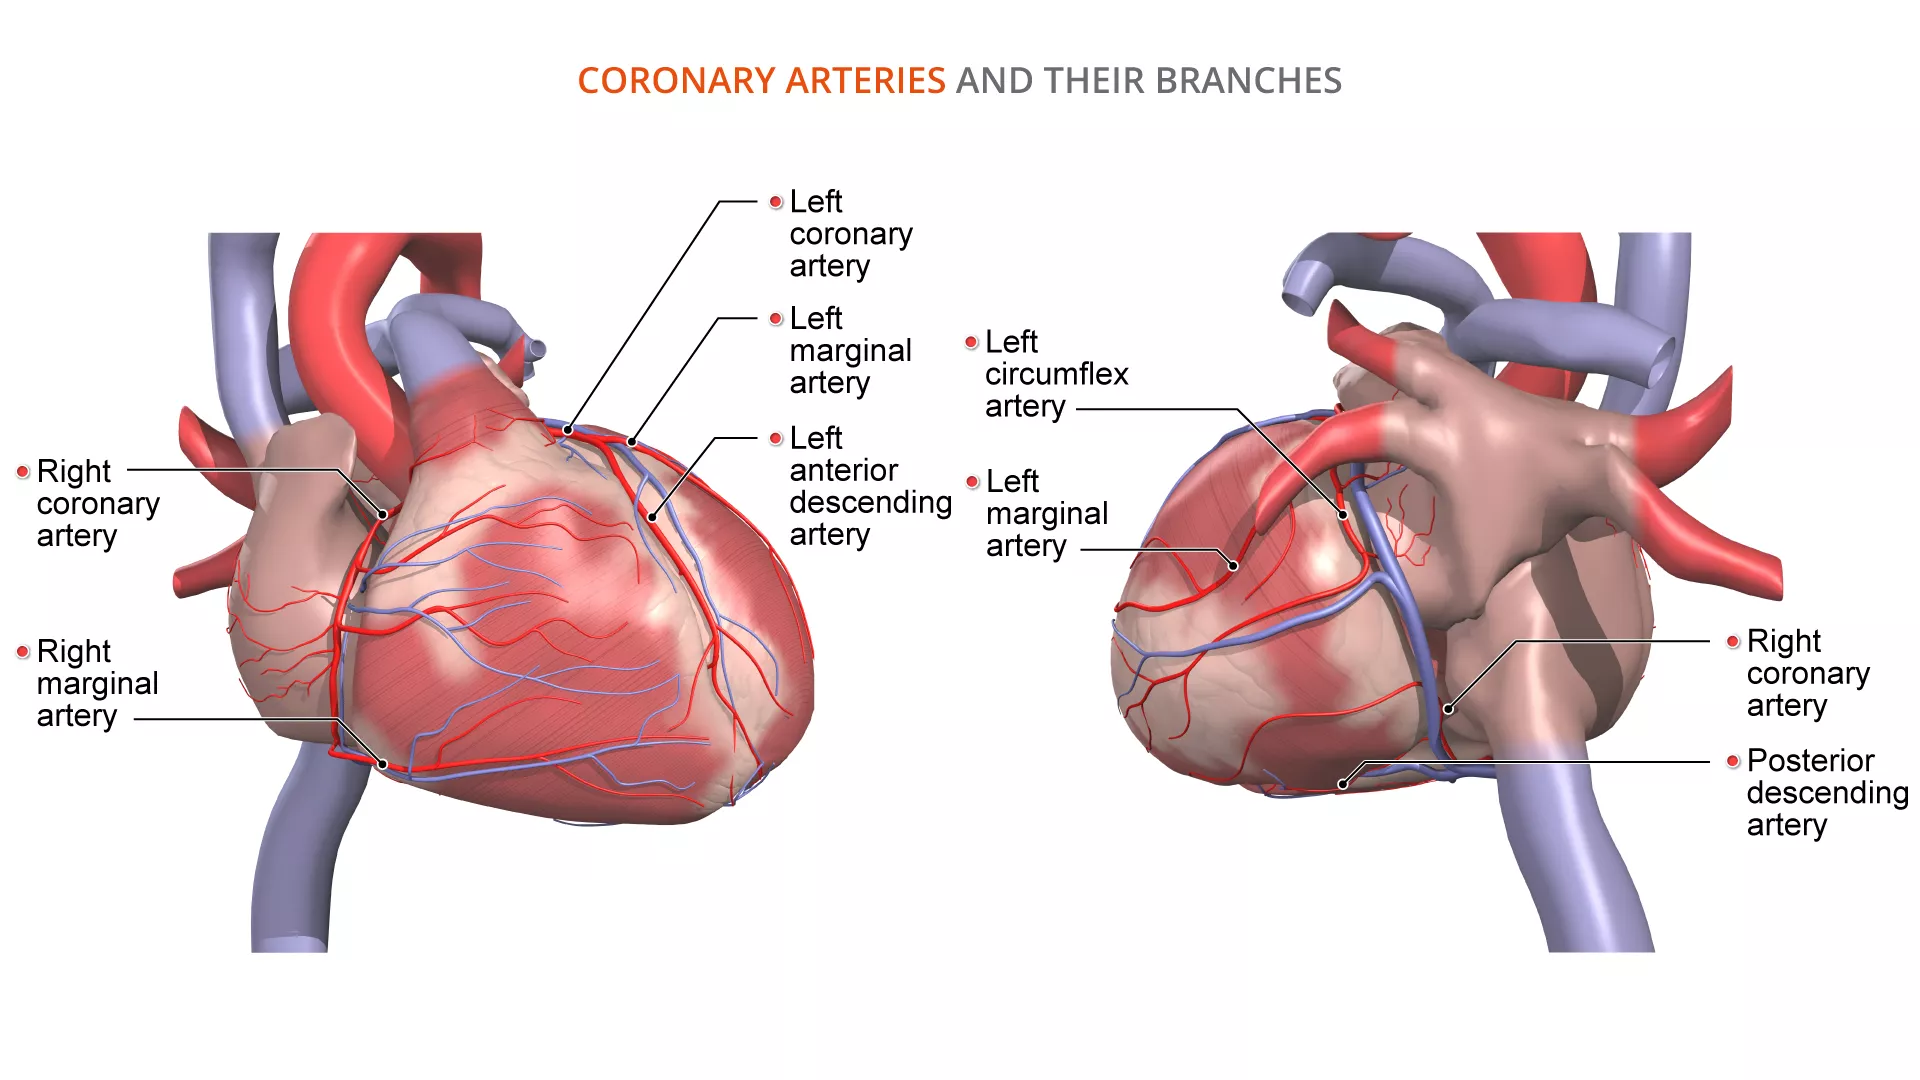 Heart anatomy: Structure, valves, coronary vessels